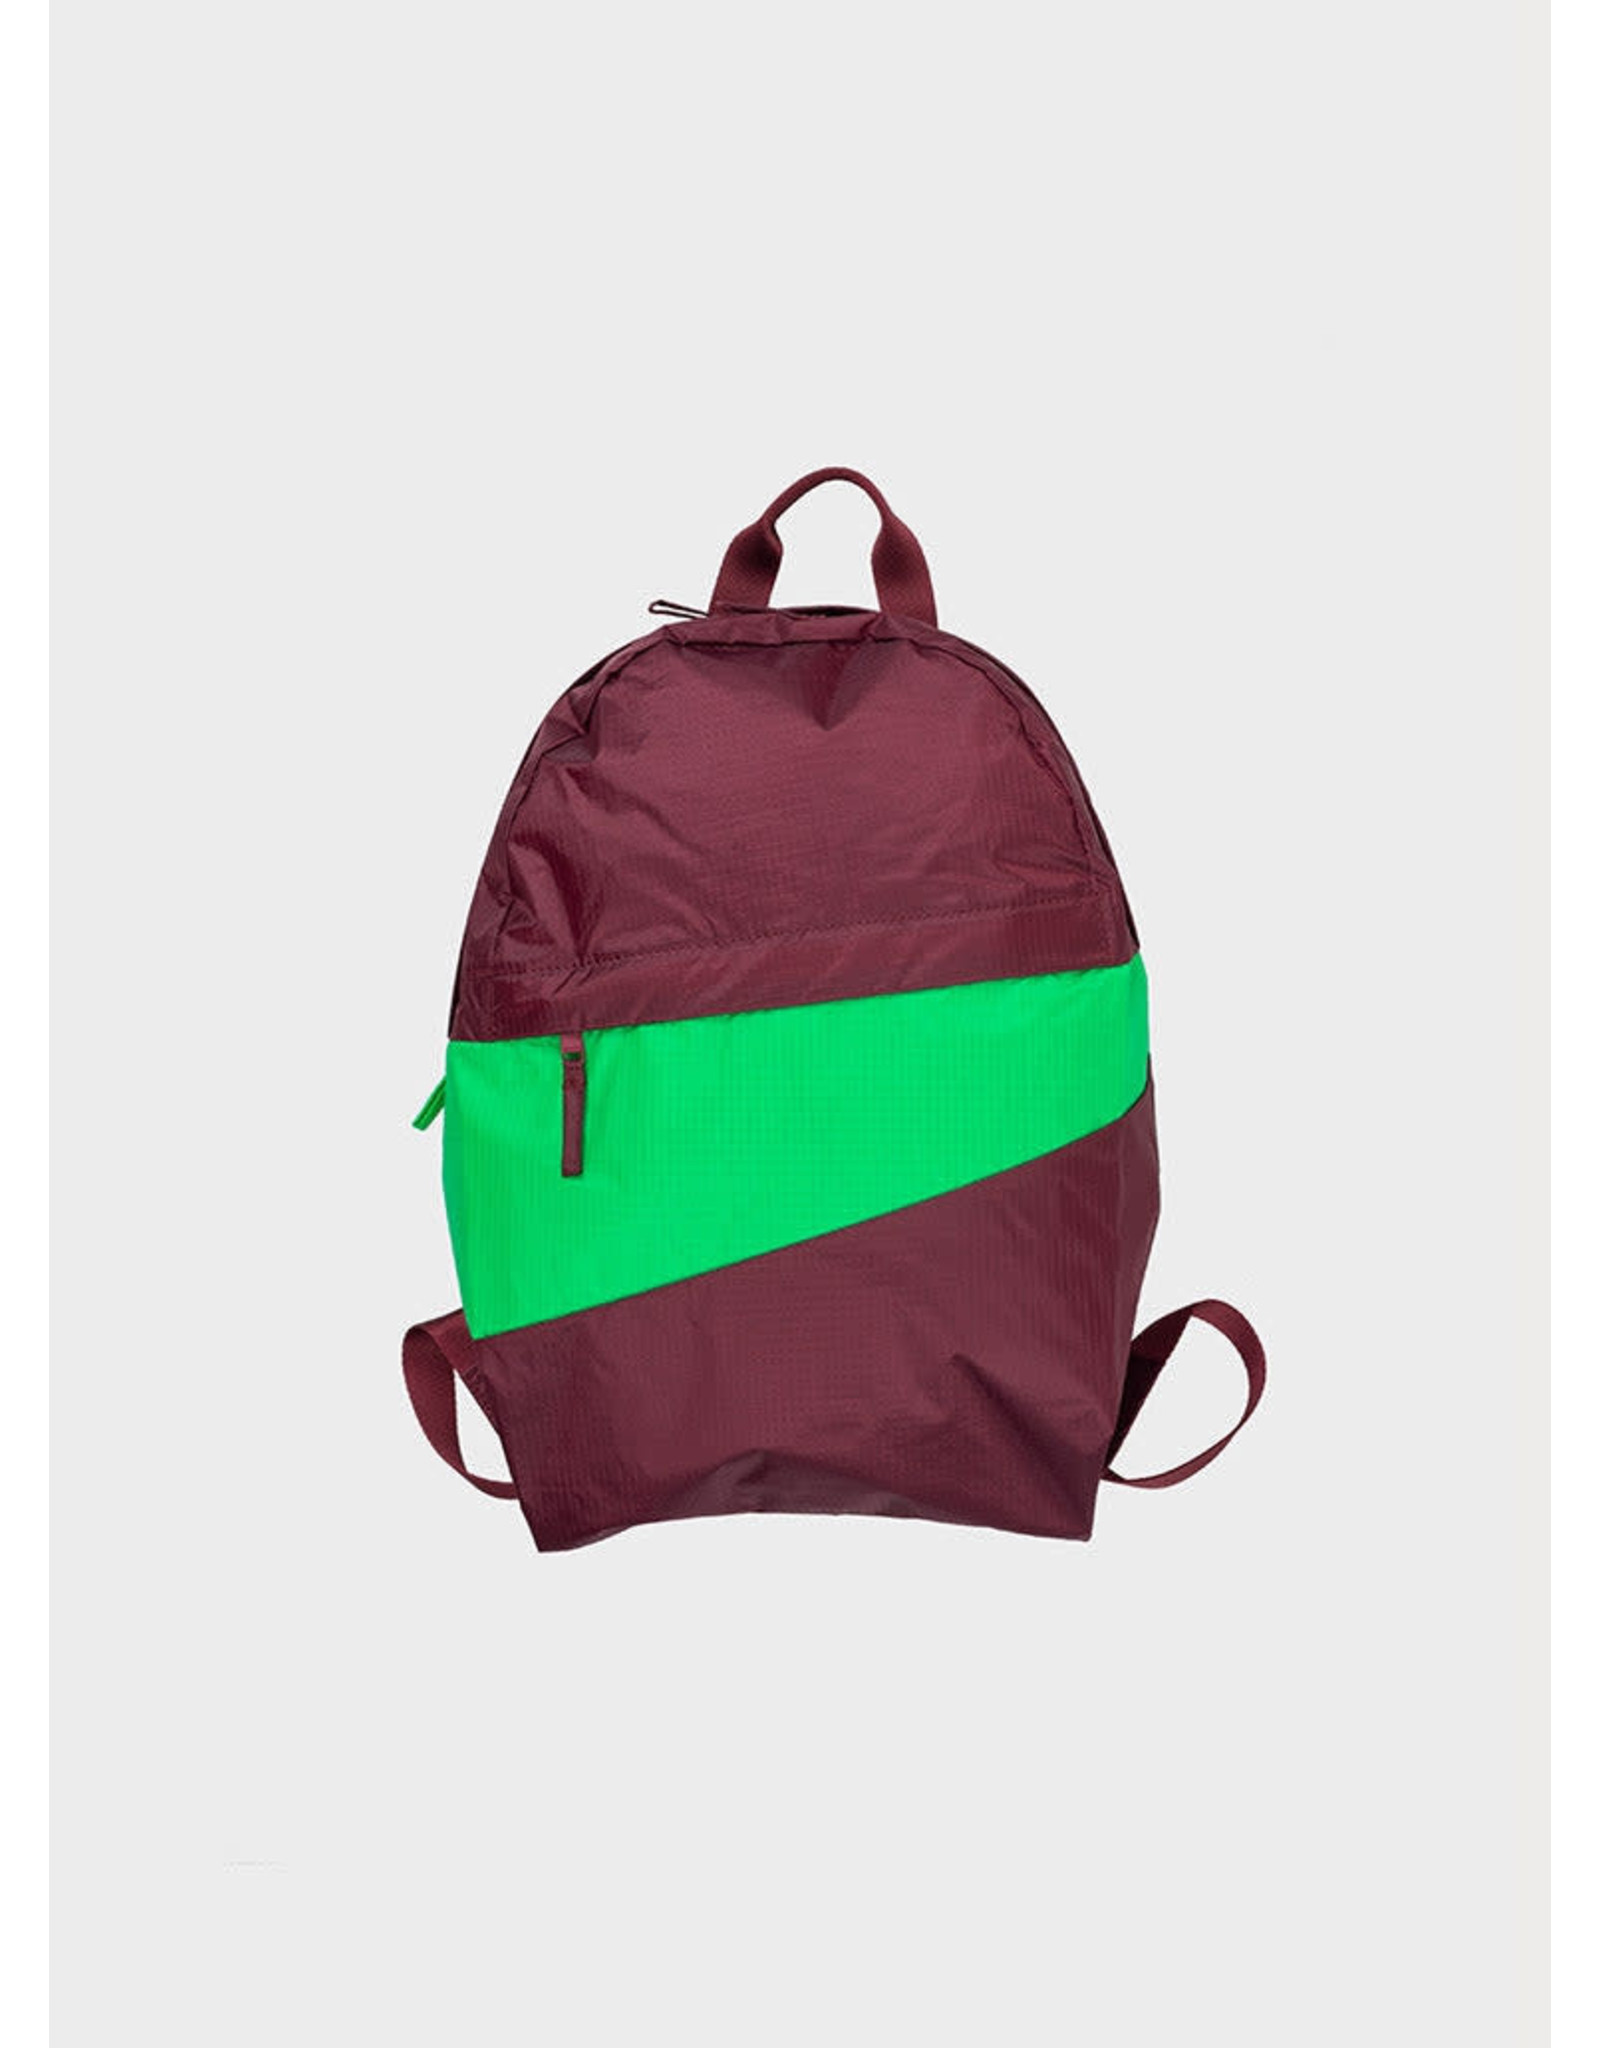 Susan Bijl Foldable Backpack M, Burgundy & Greenscreen - 40 x 25 x 10 cm